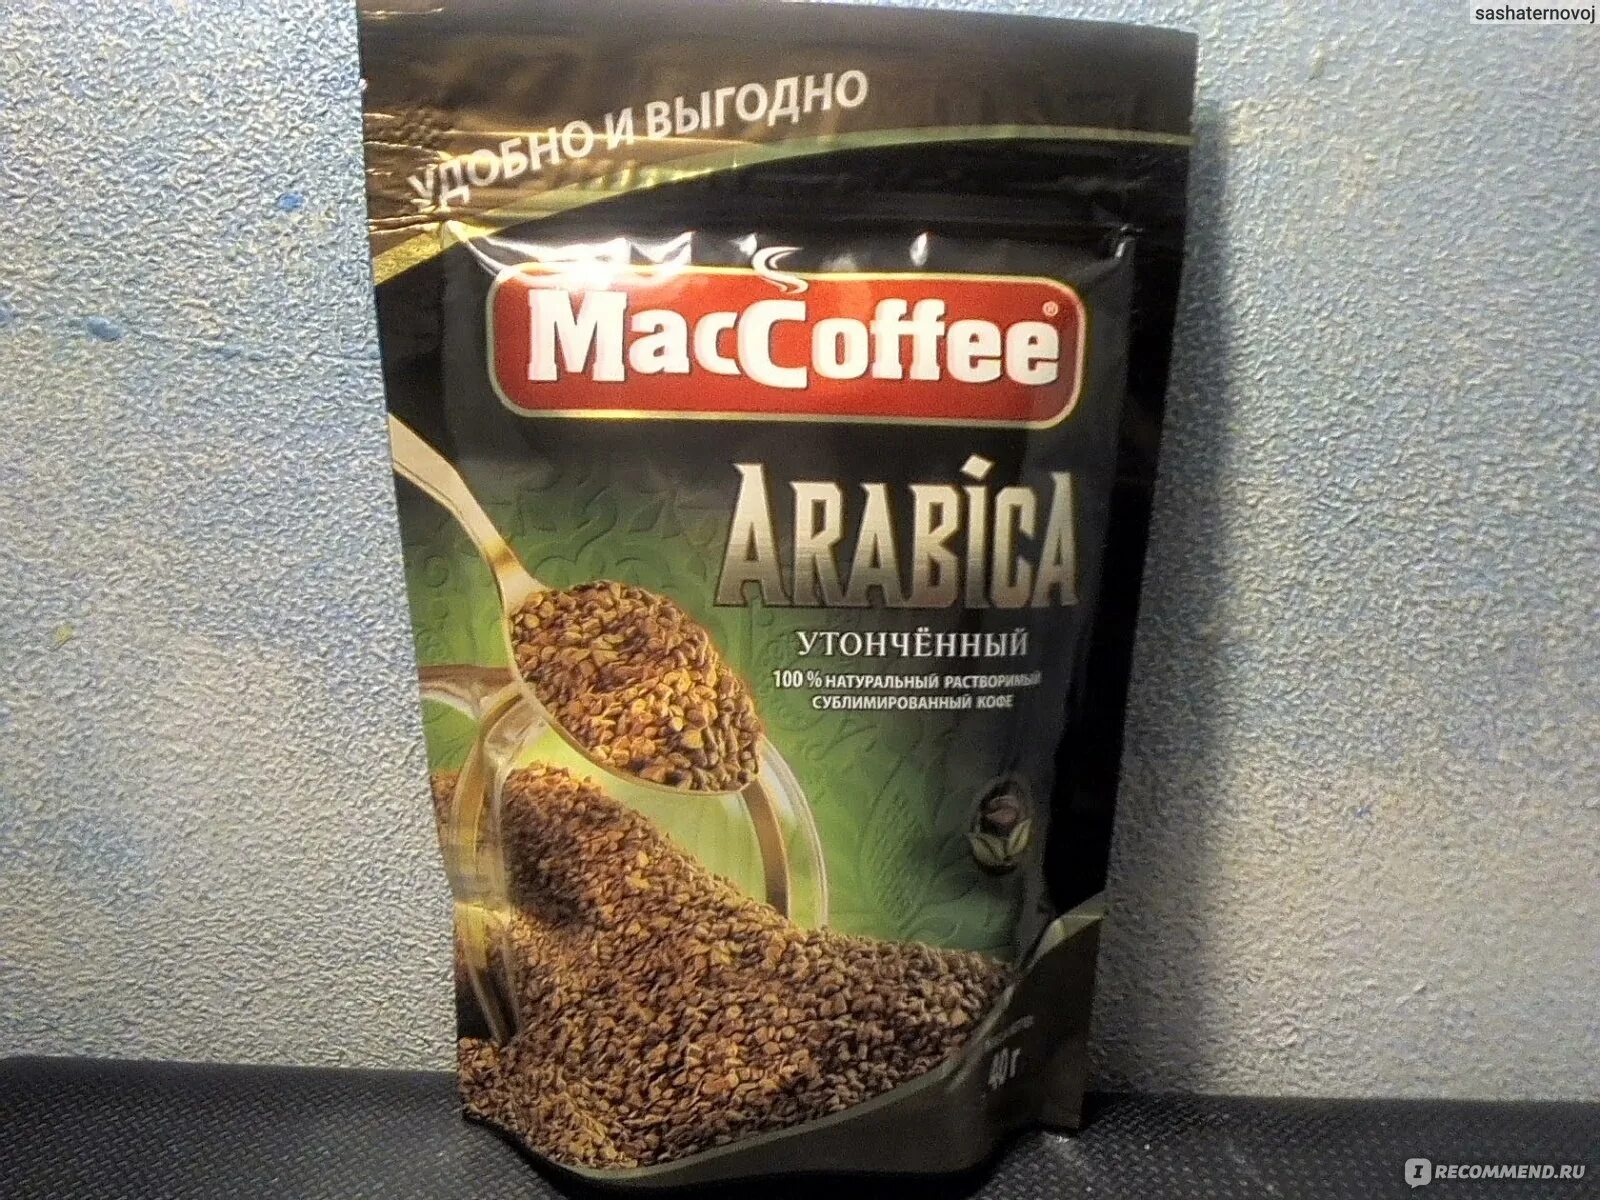 Кофе maccoffee arabica